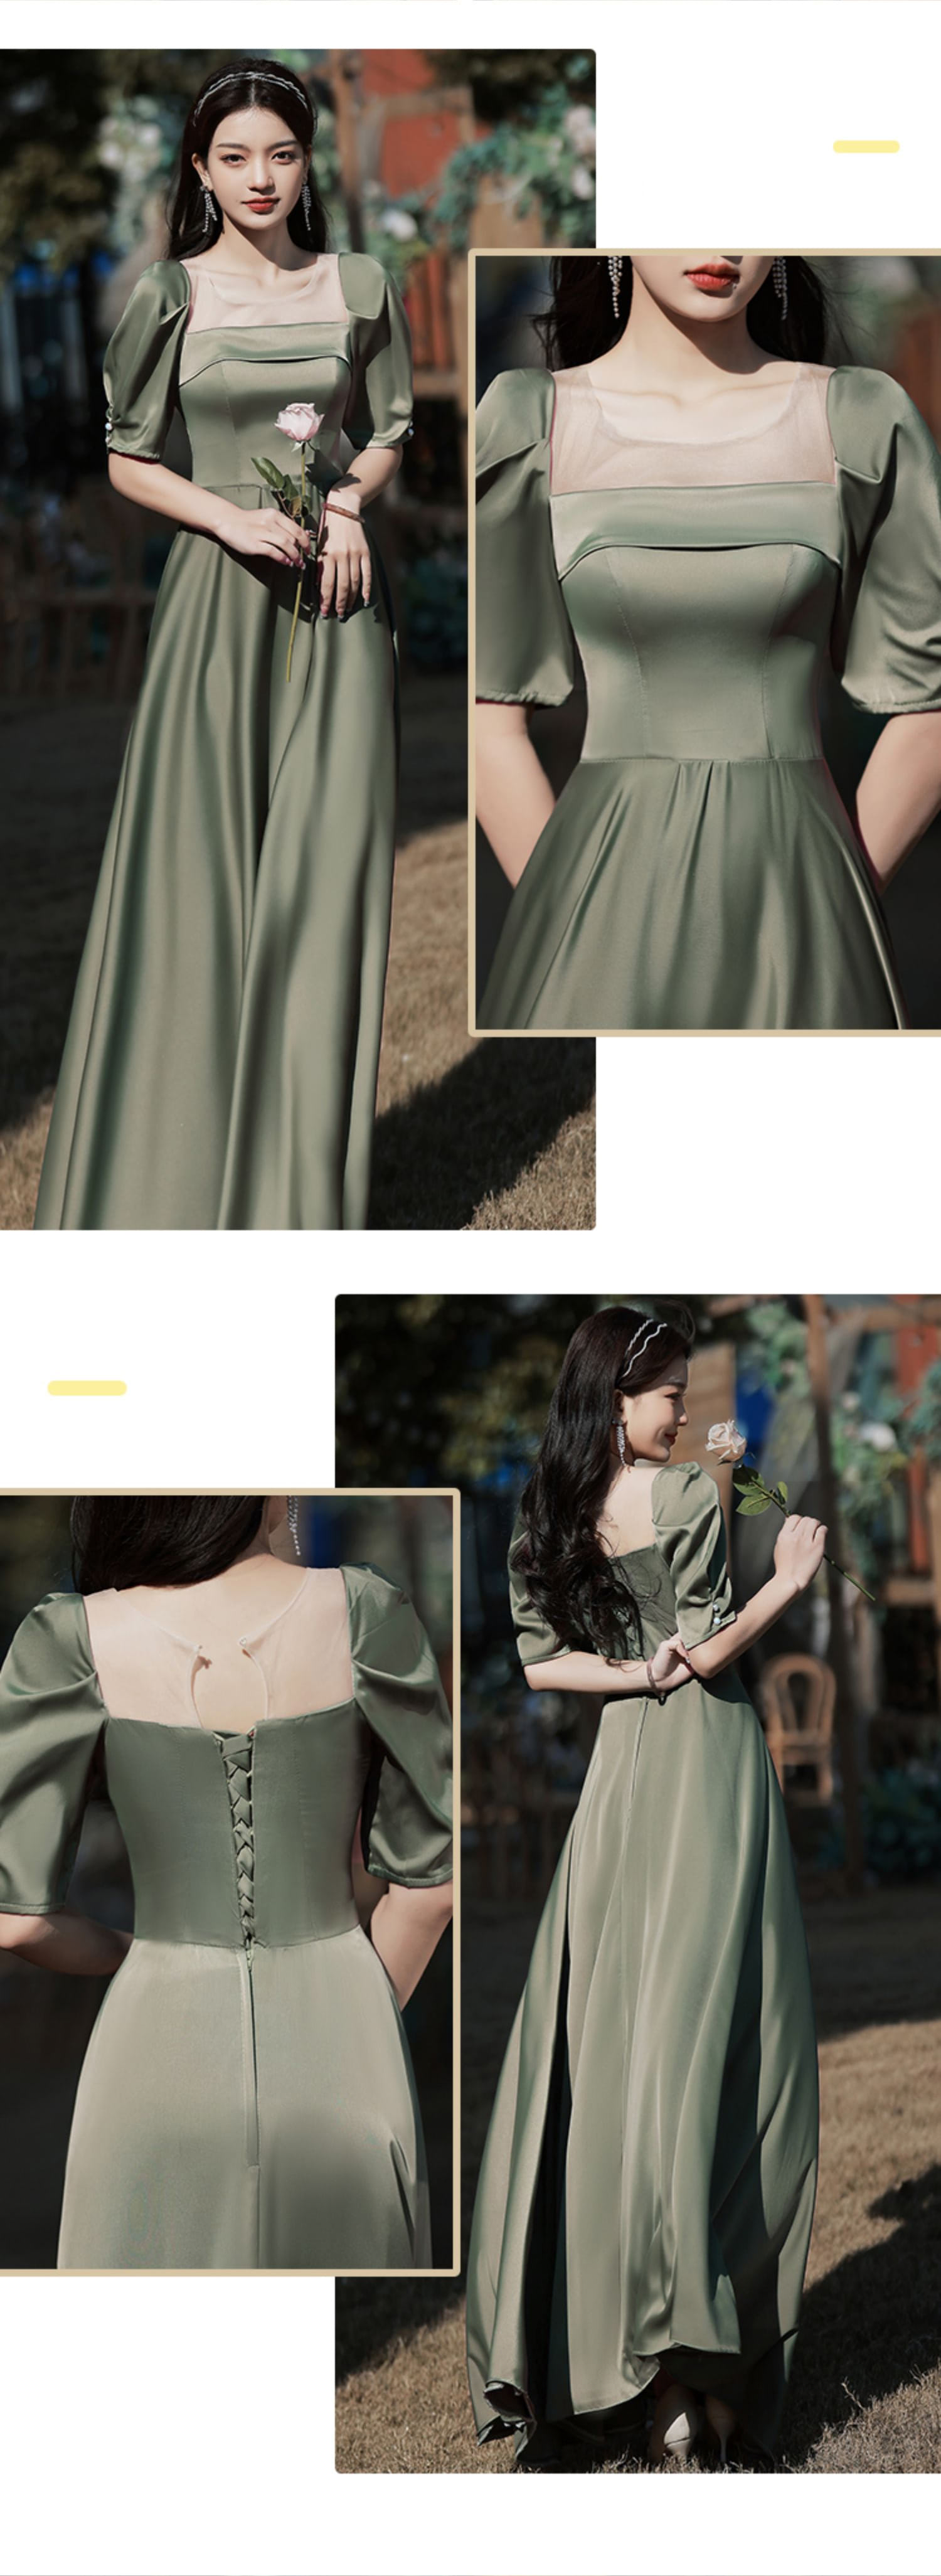 Green-Satin-Bridesmaid-Maxi-Dress-Boho-Wedding-Guest-Party-Outfit20.jpg